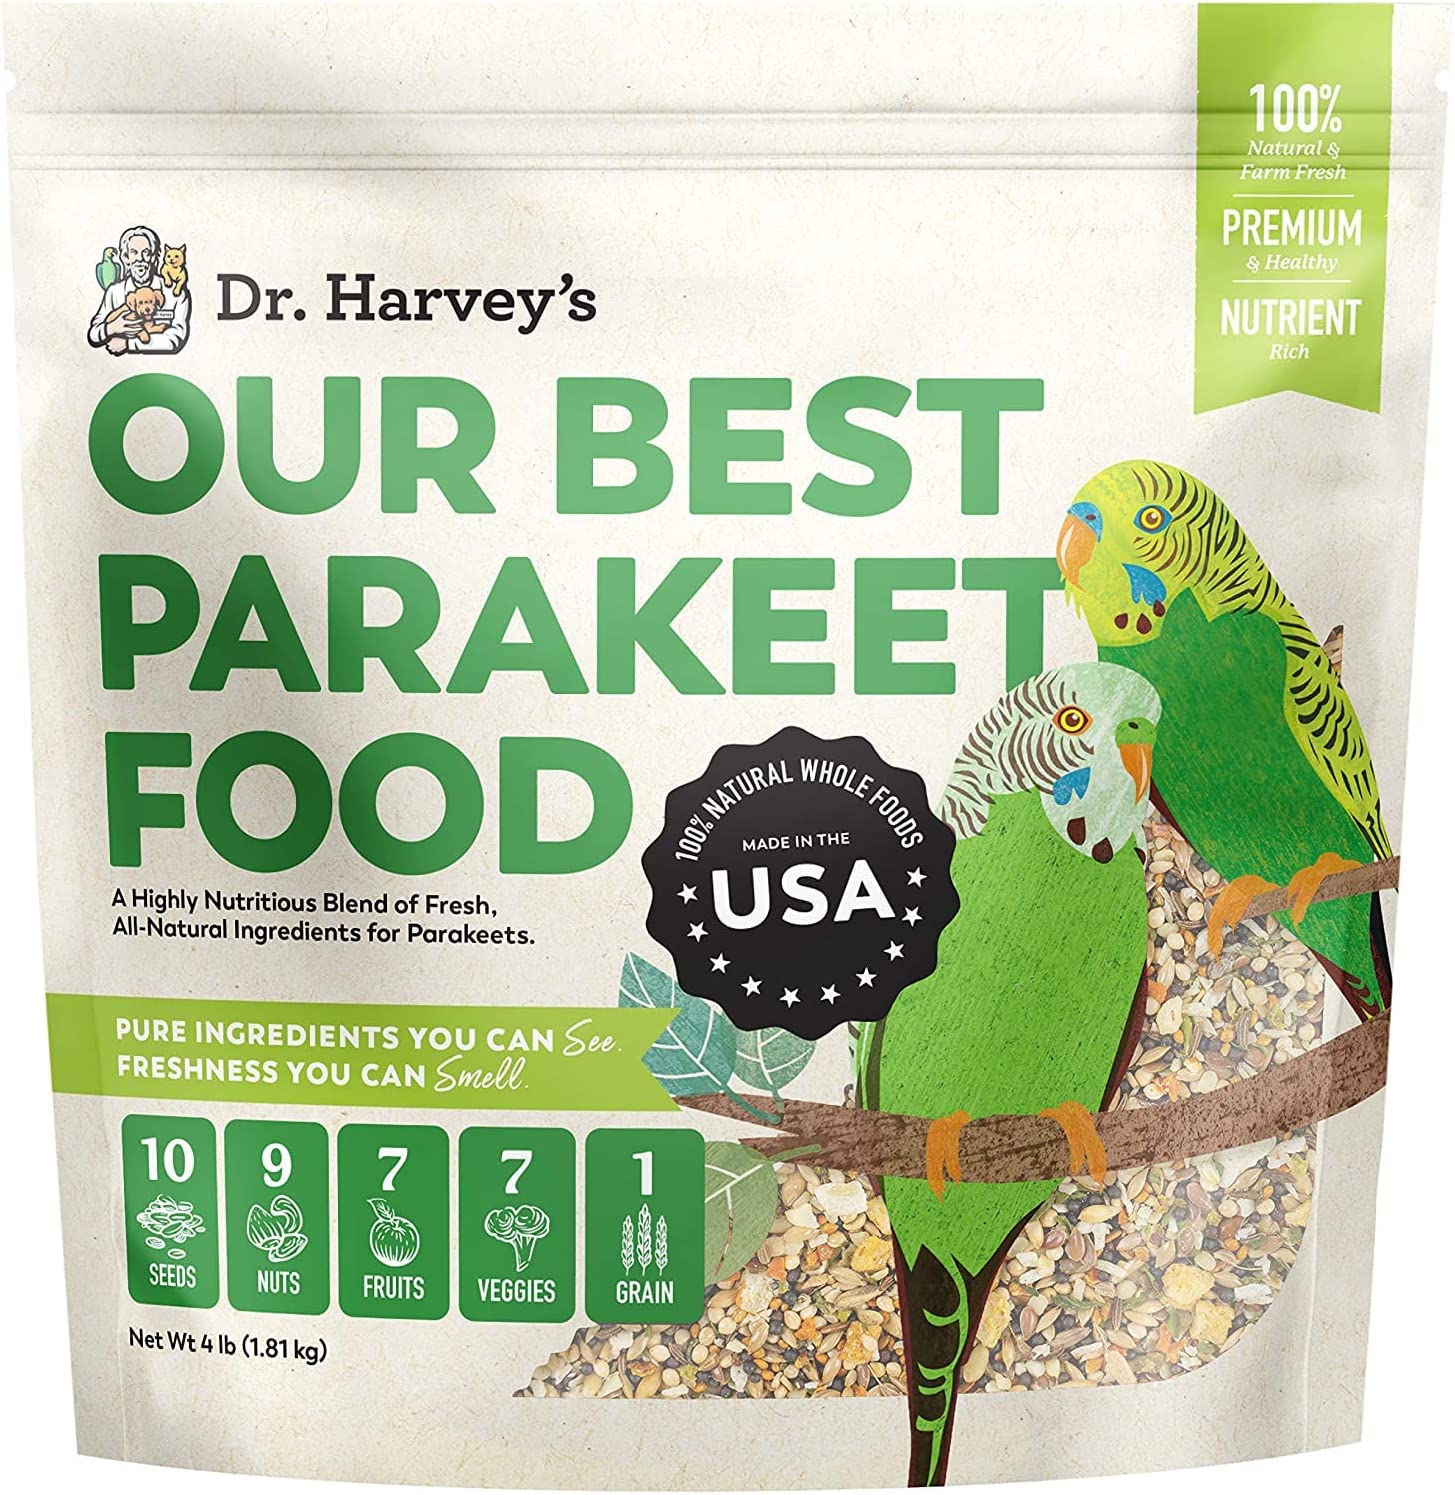 Dr. Harvey's Our Best Parakeet Food